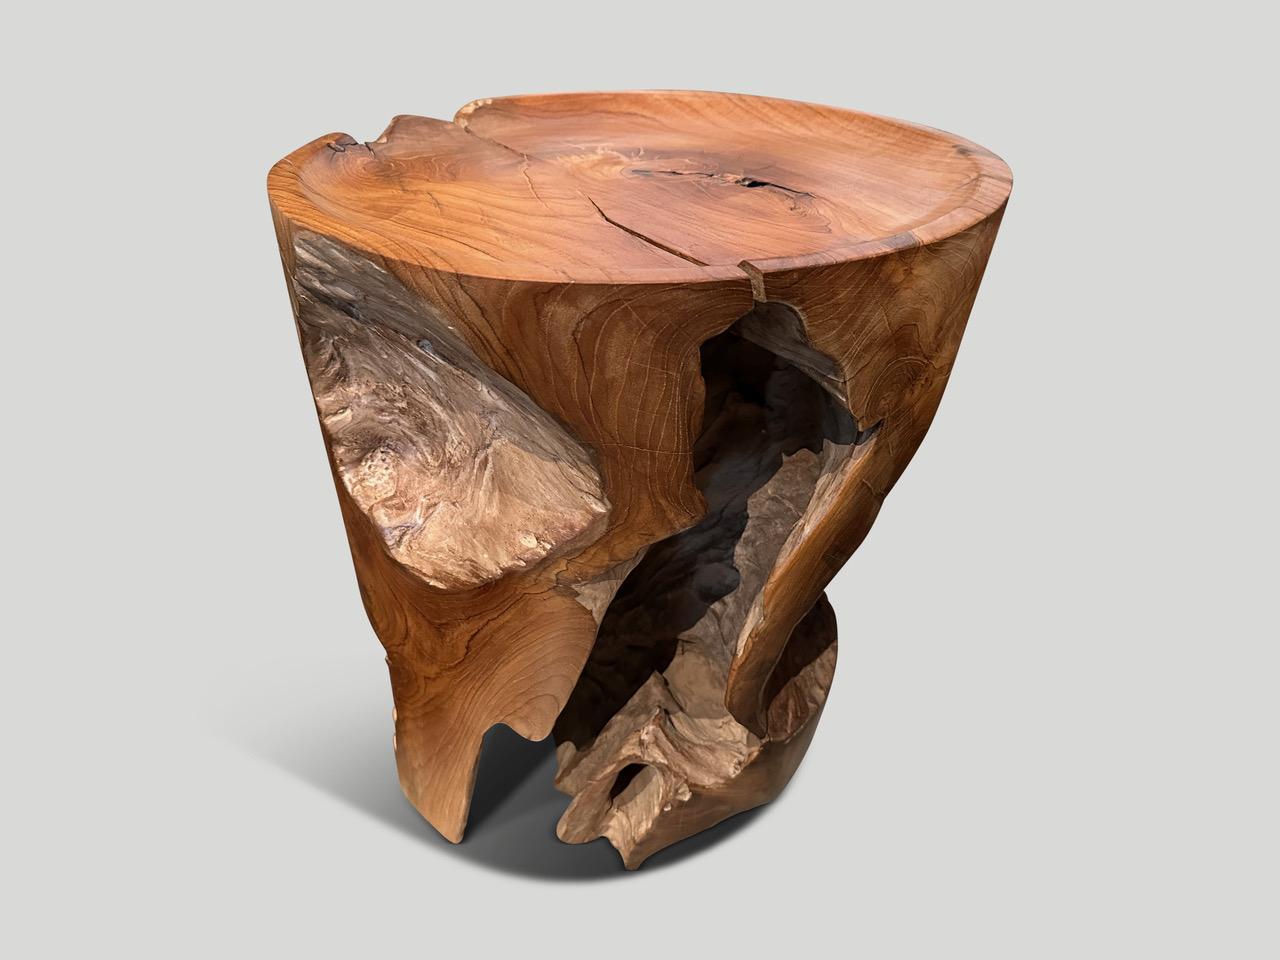 Organic Modern Andrianna Shamaris Sculptural Teak Wood Tray Side Table For Sale